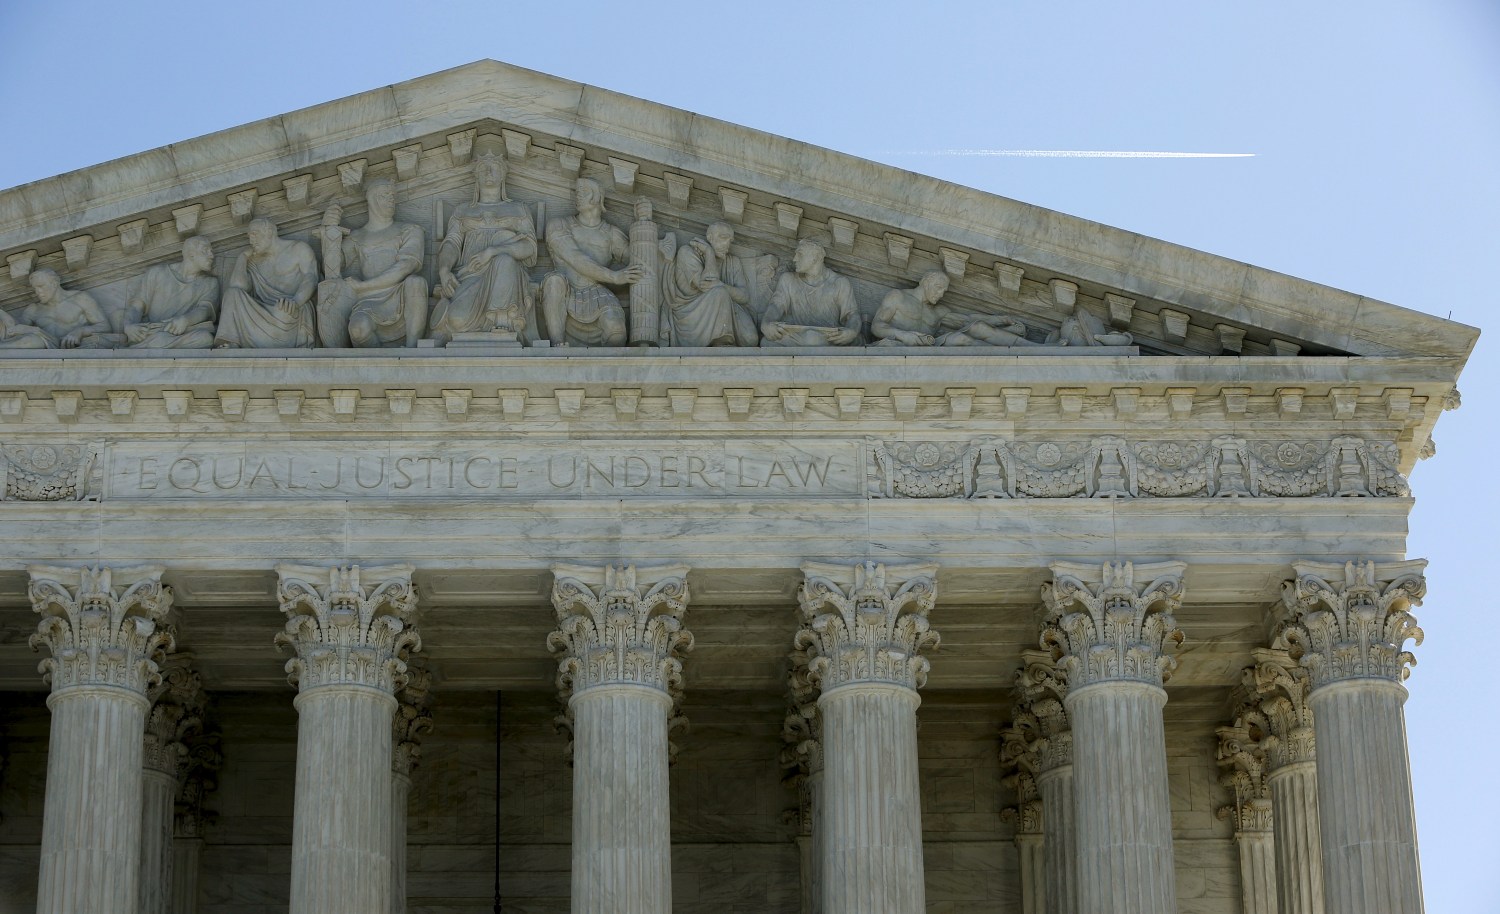 The U.S. Supreme Court building facade in Washington